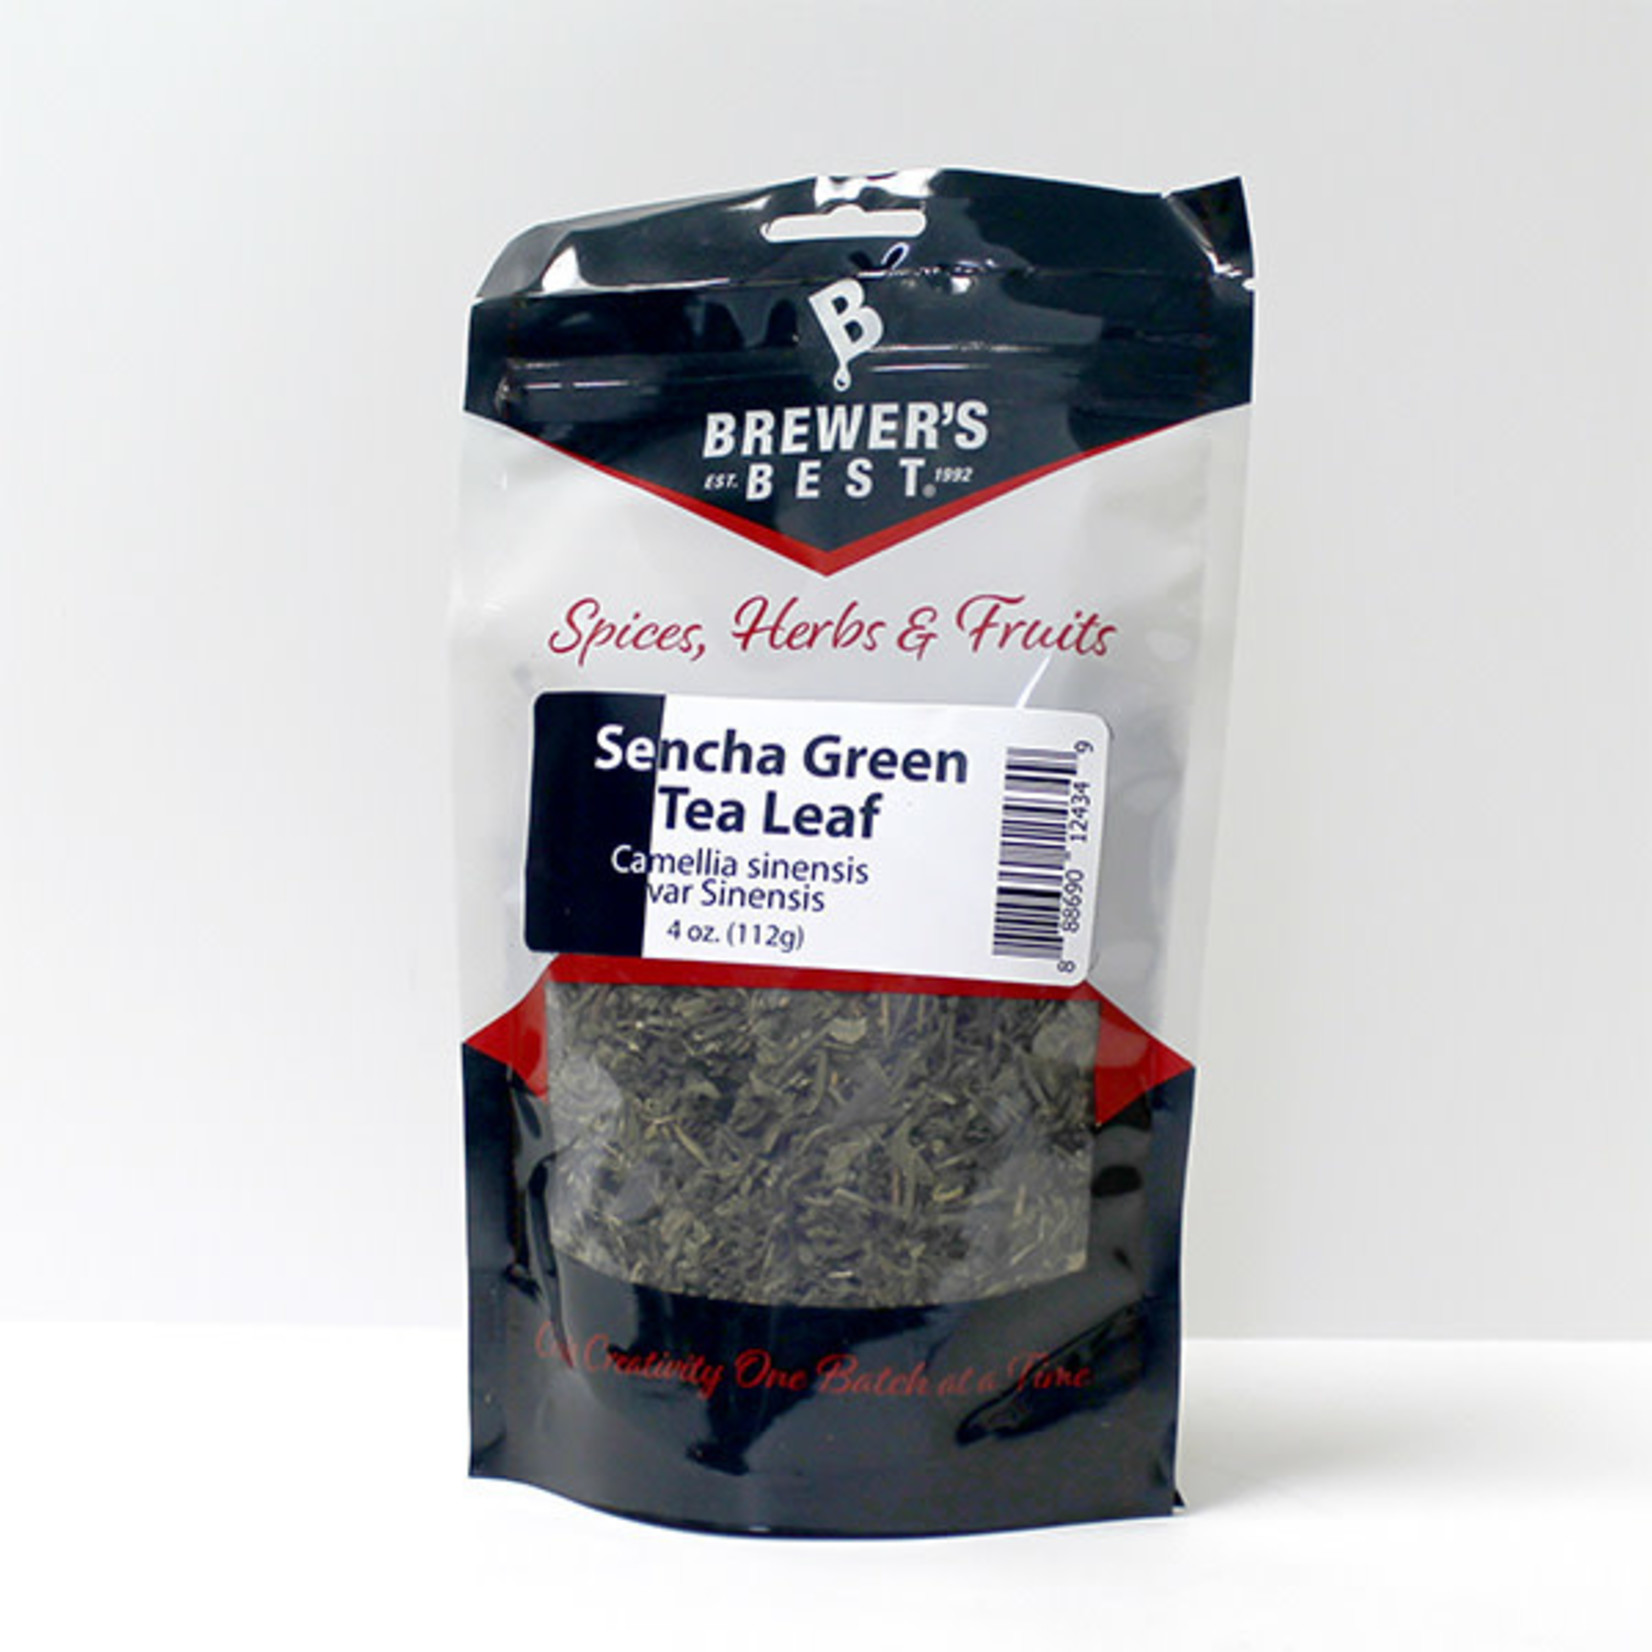 Brewer’s Best® Sencha Green Tea 4 oz